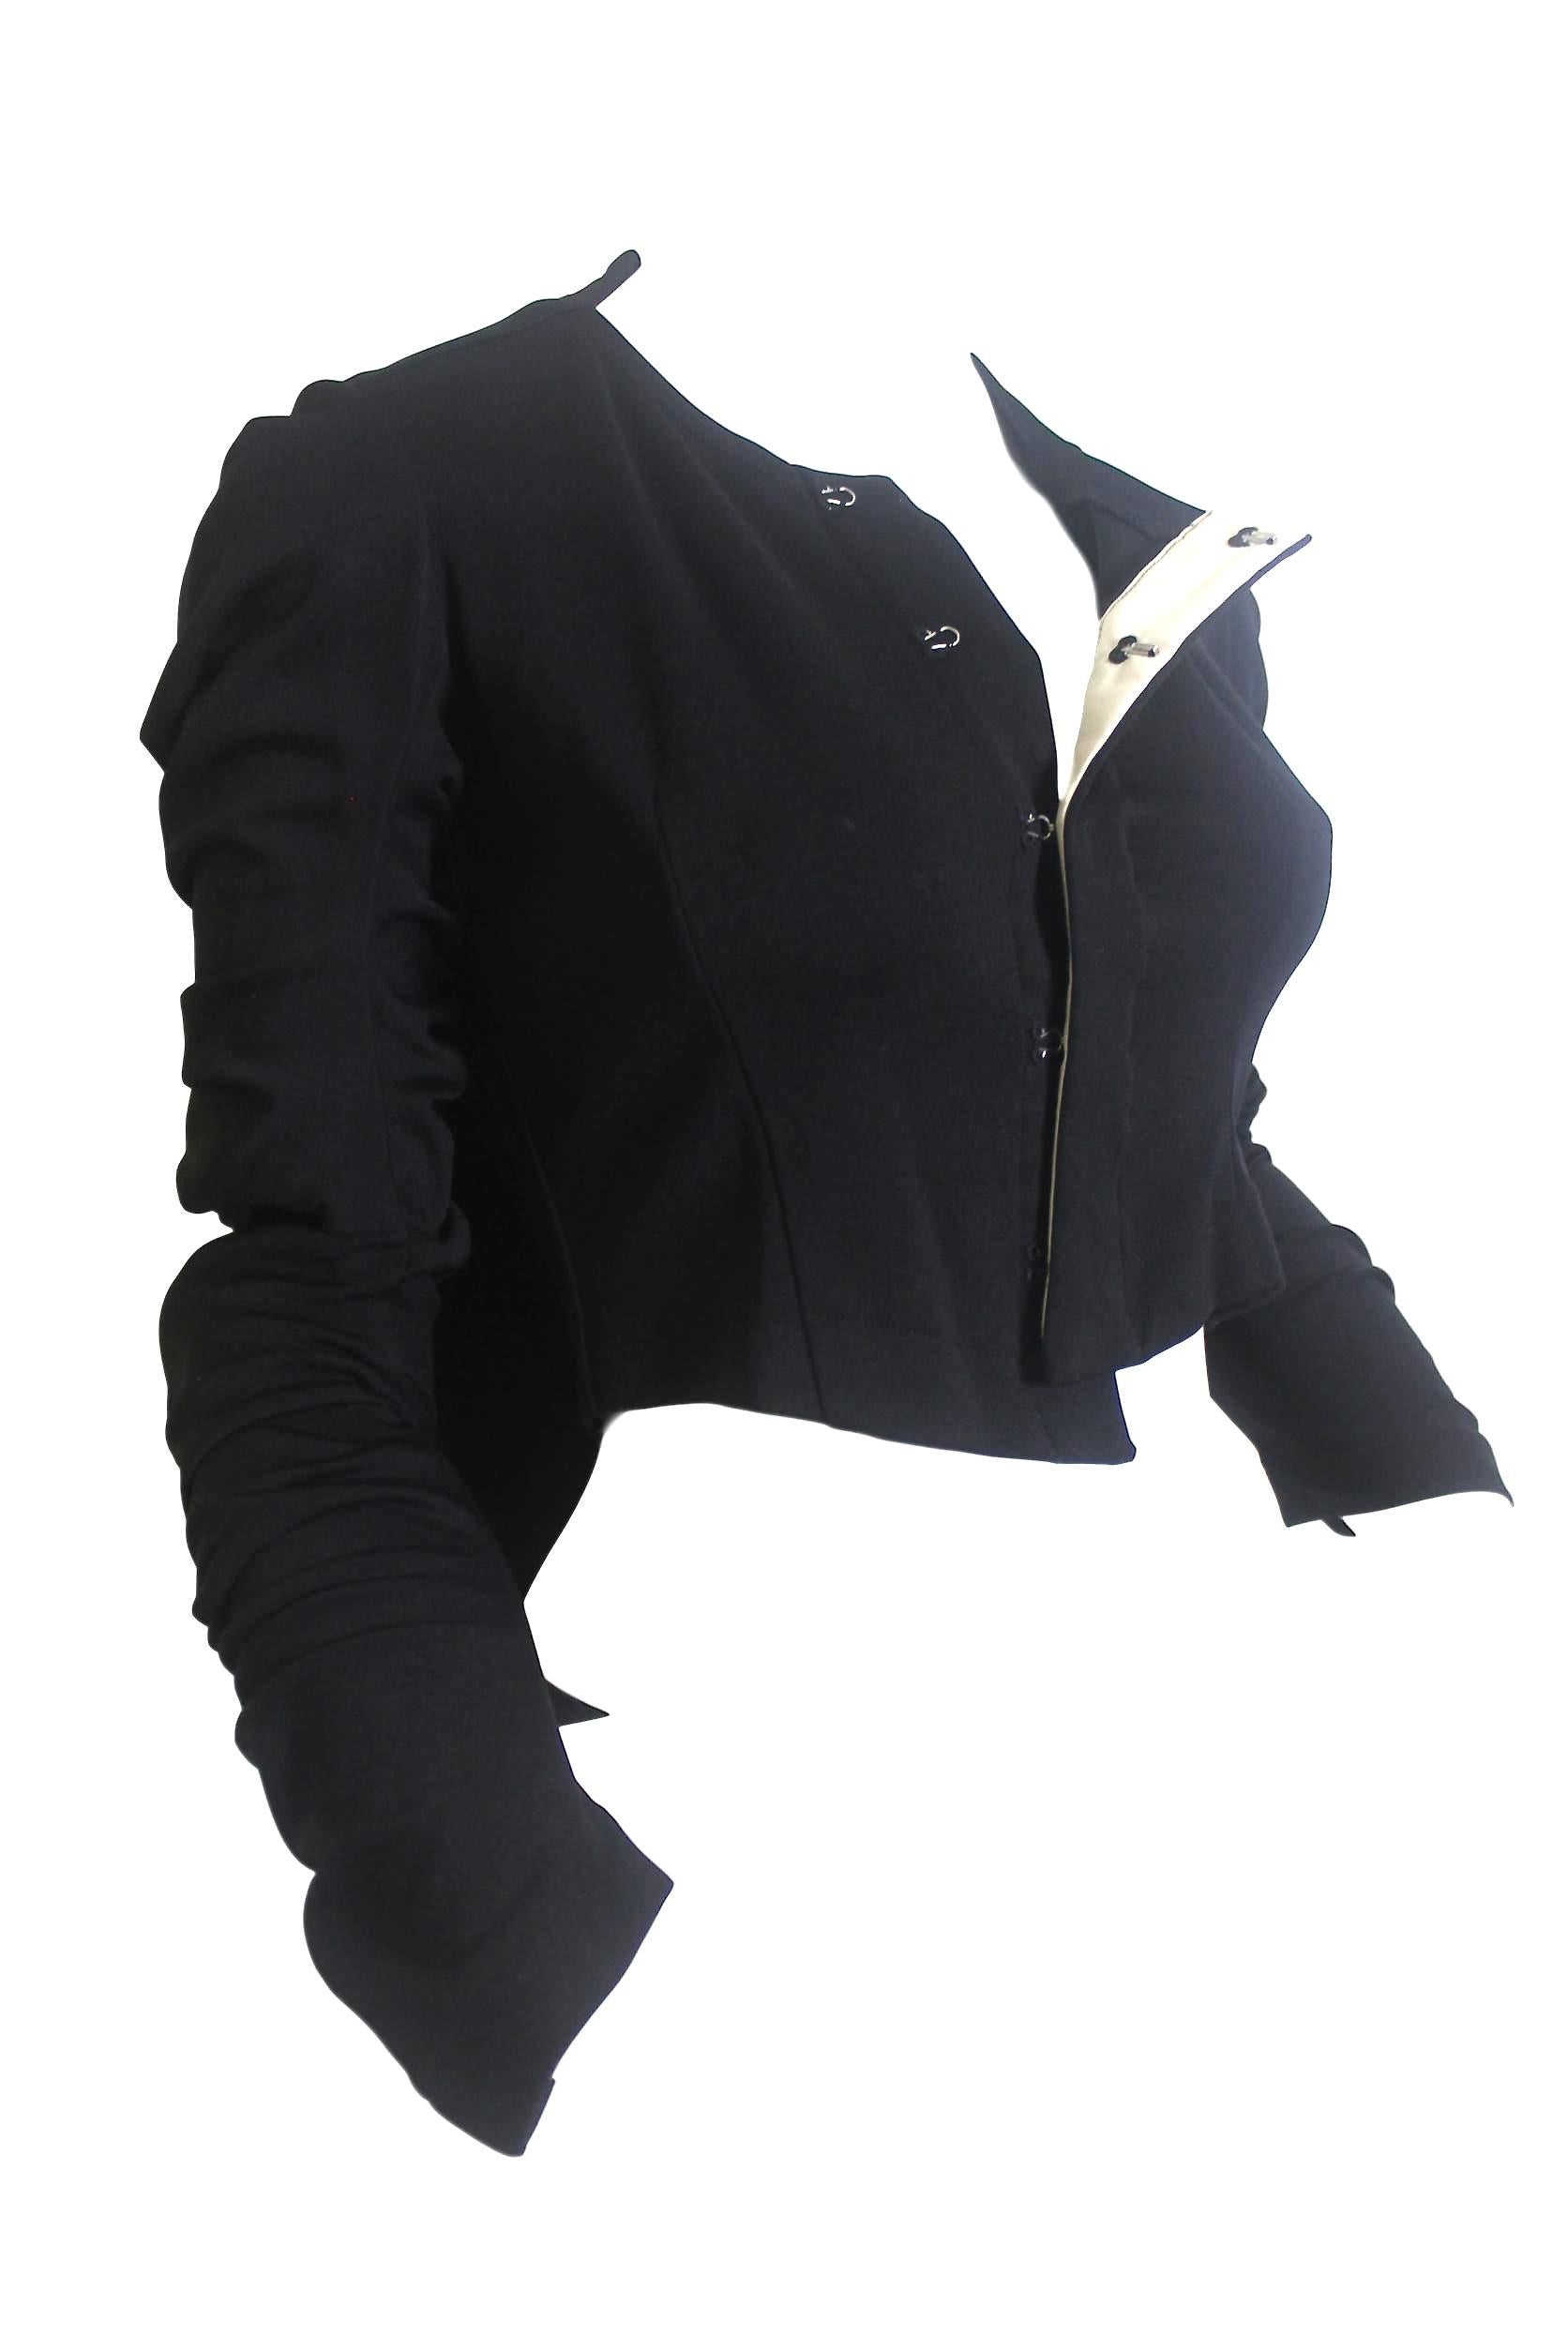 Comme des Garcons AD 2004 Spiral Sleeve Bustier Jacket For Sale 3